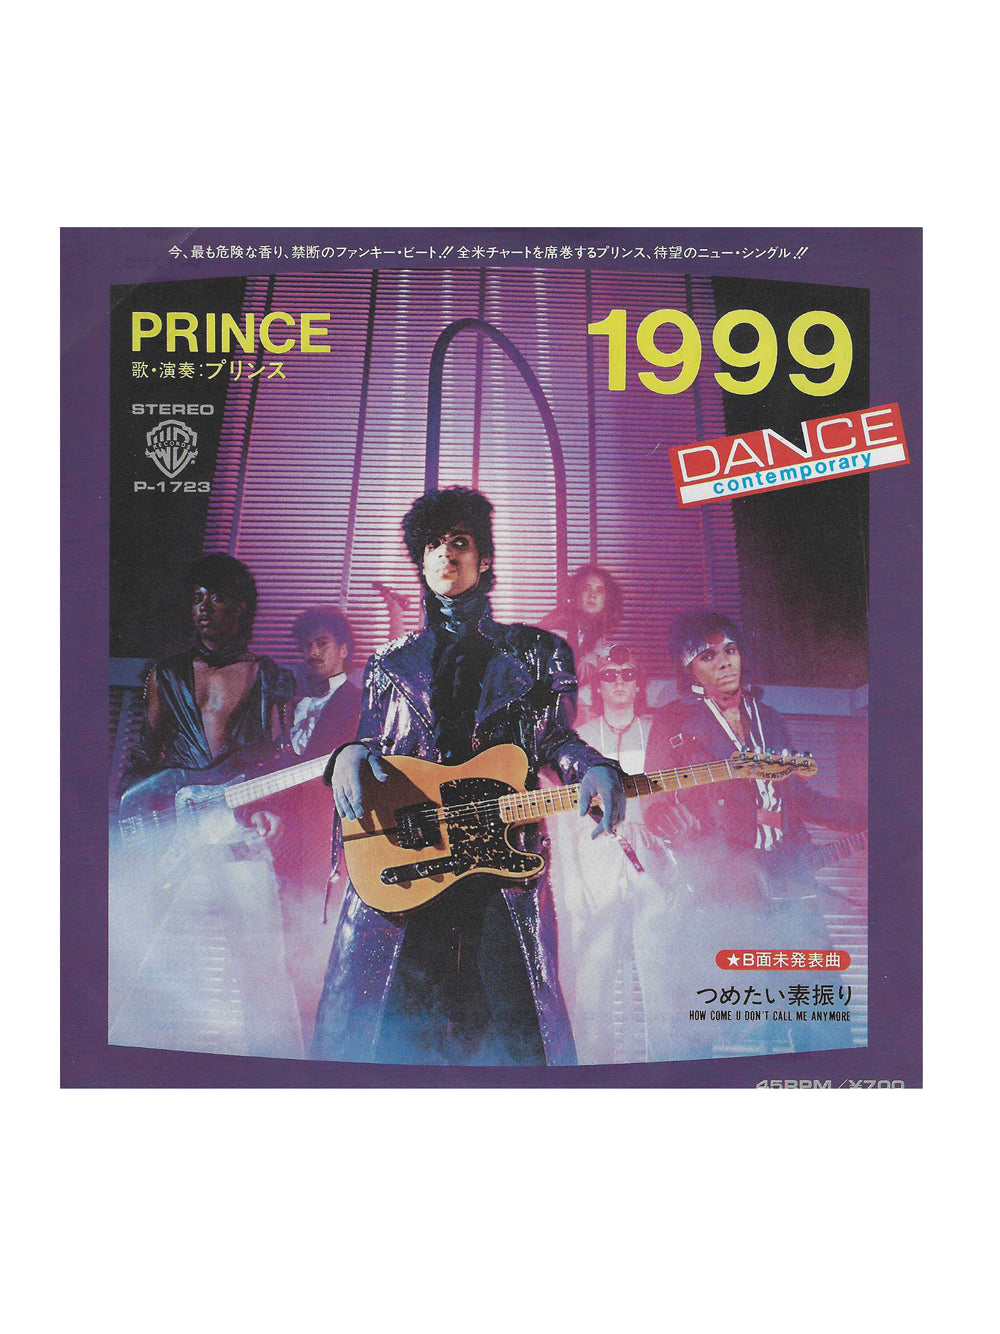 Prince – 1999 7 Inch Vinyl Single 1982 Original Japan Release